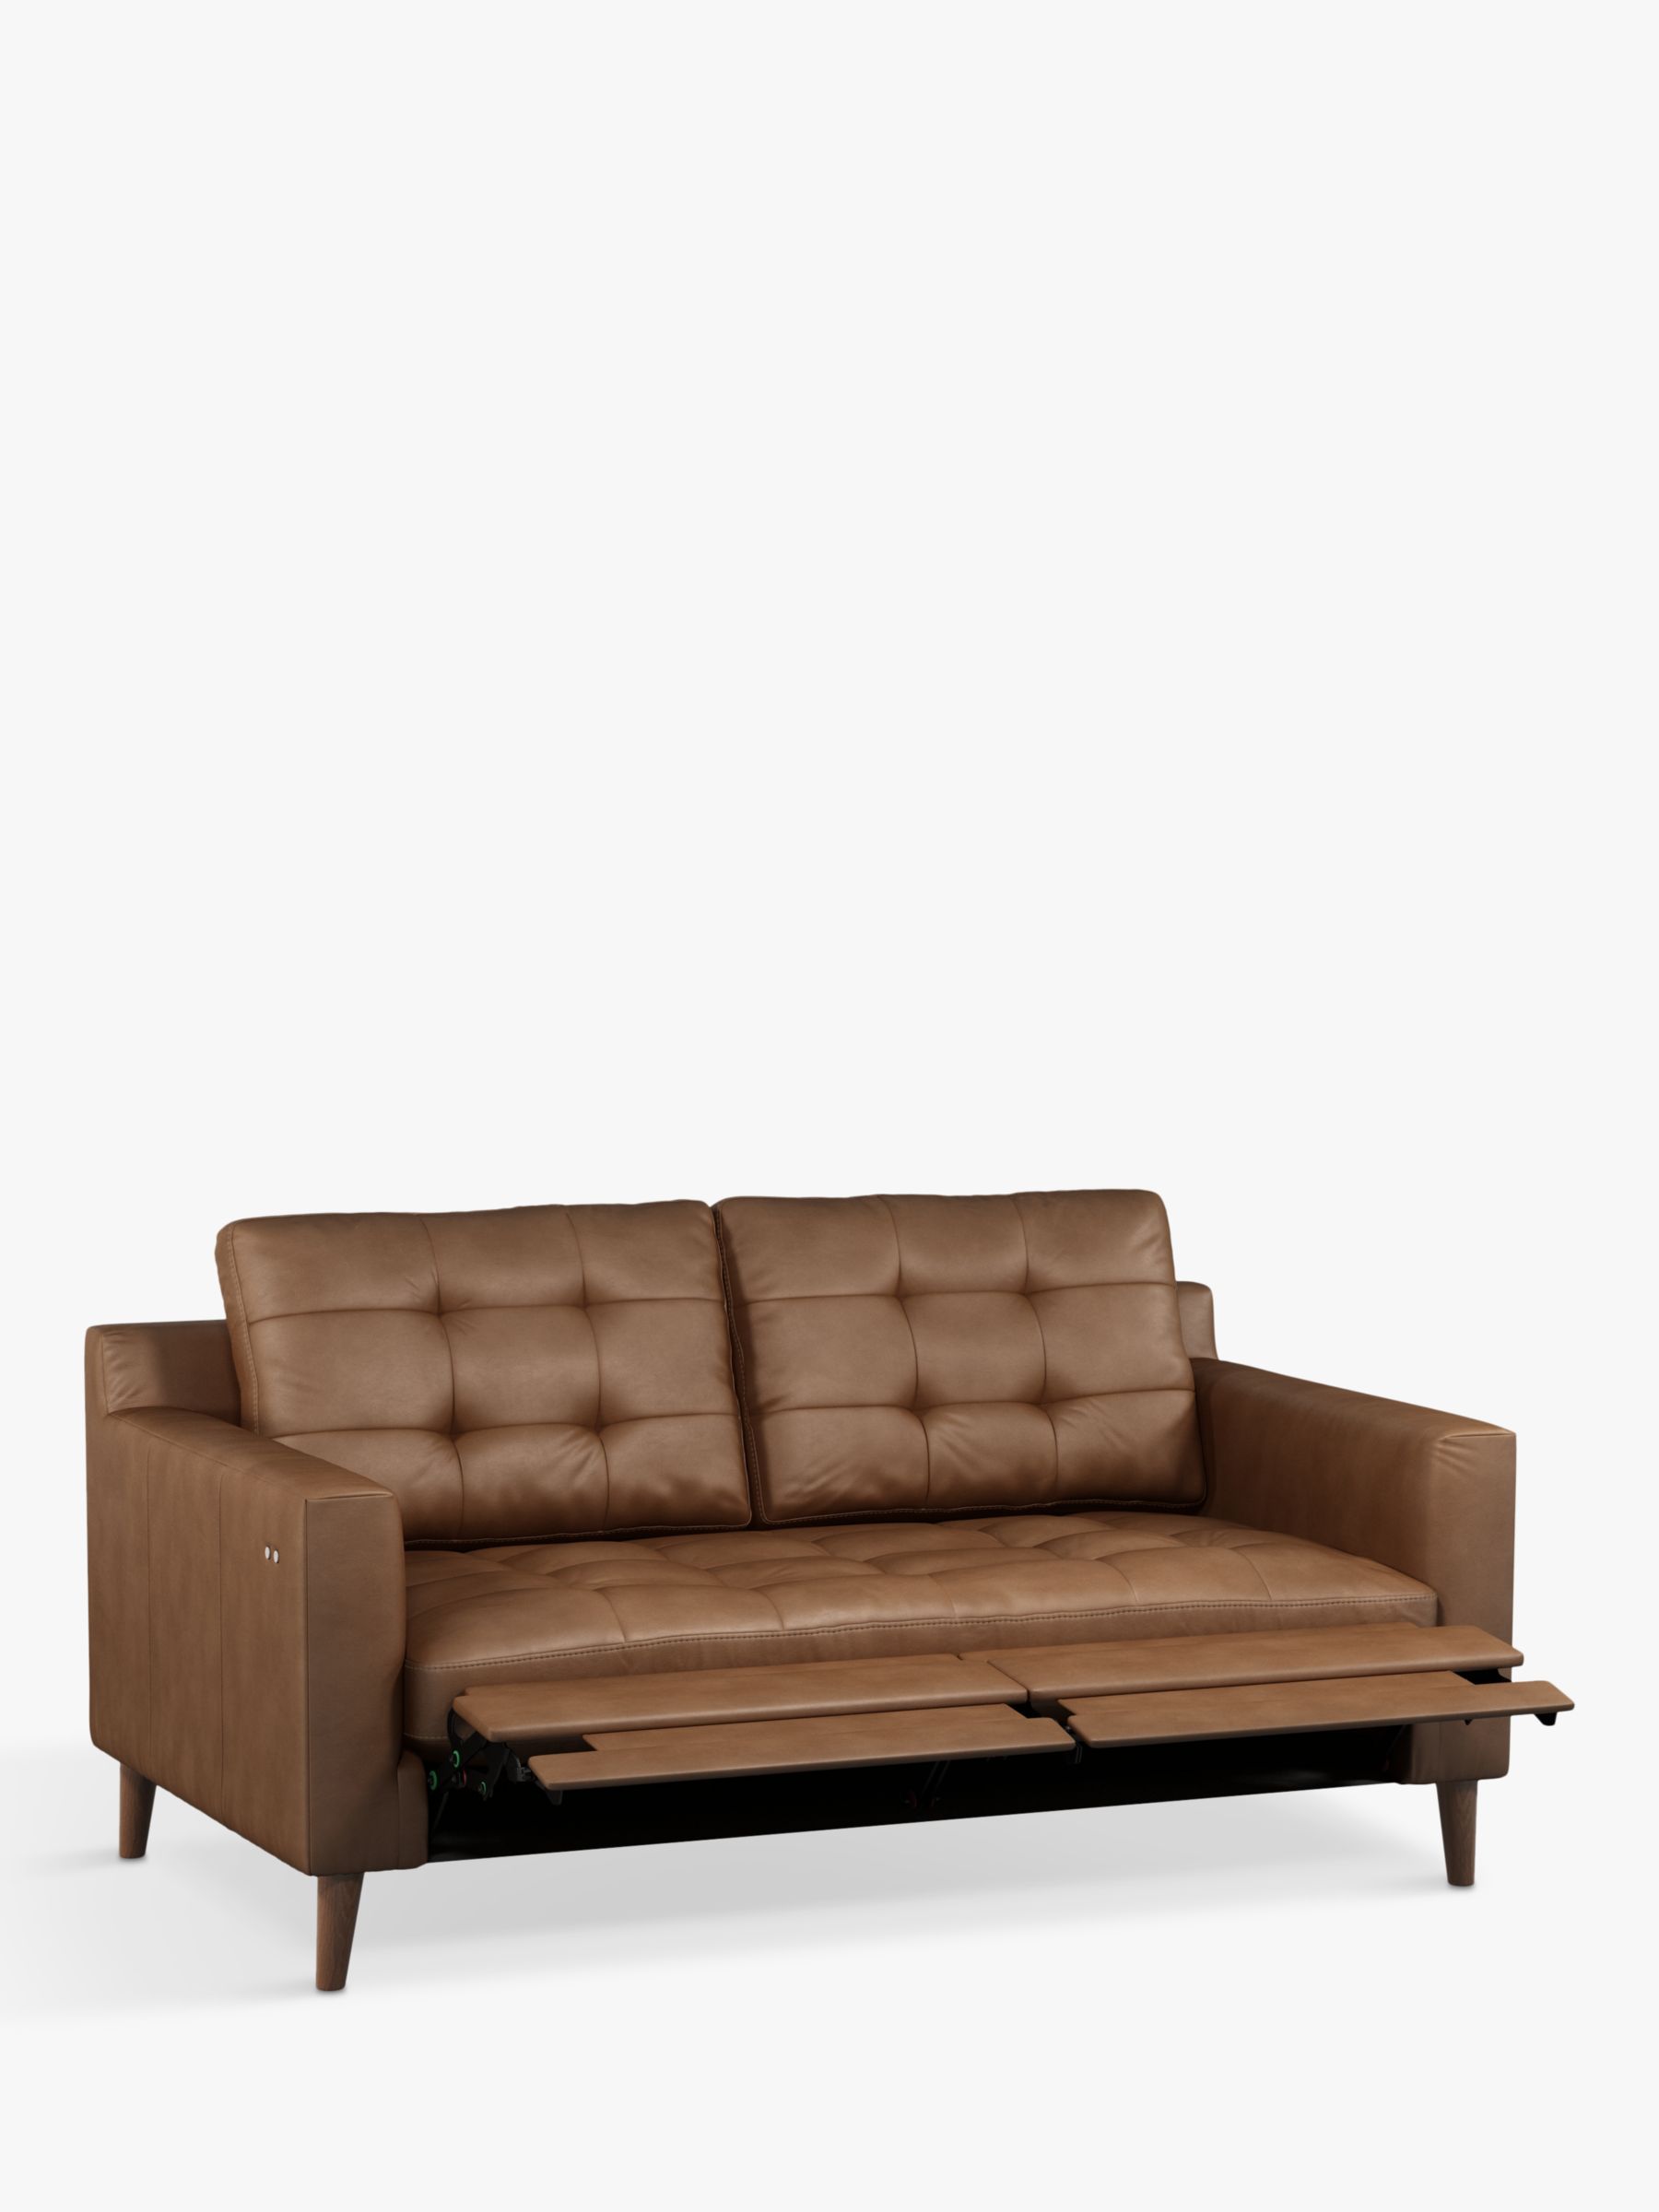 Photo of John lewis draper motion medium 2 seater leather sofa with footrest mechanism dark leg